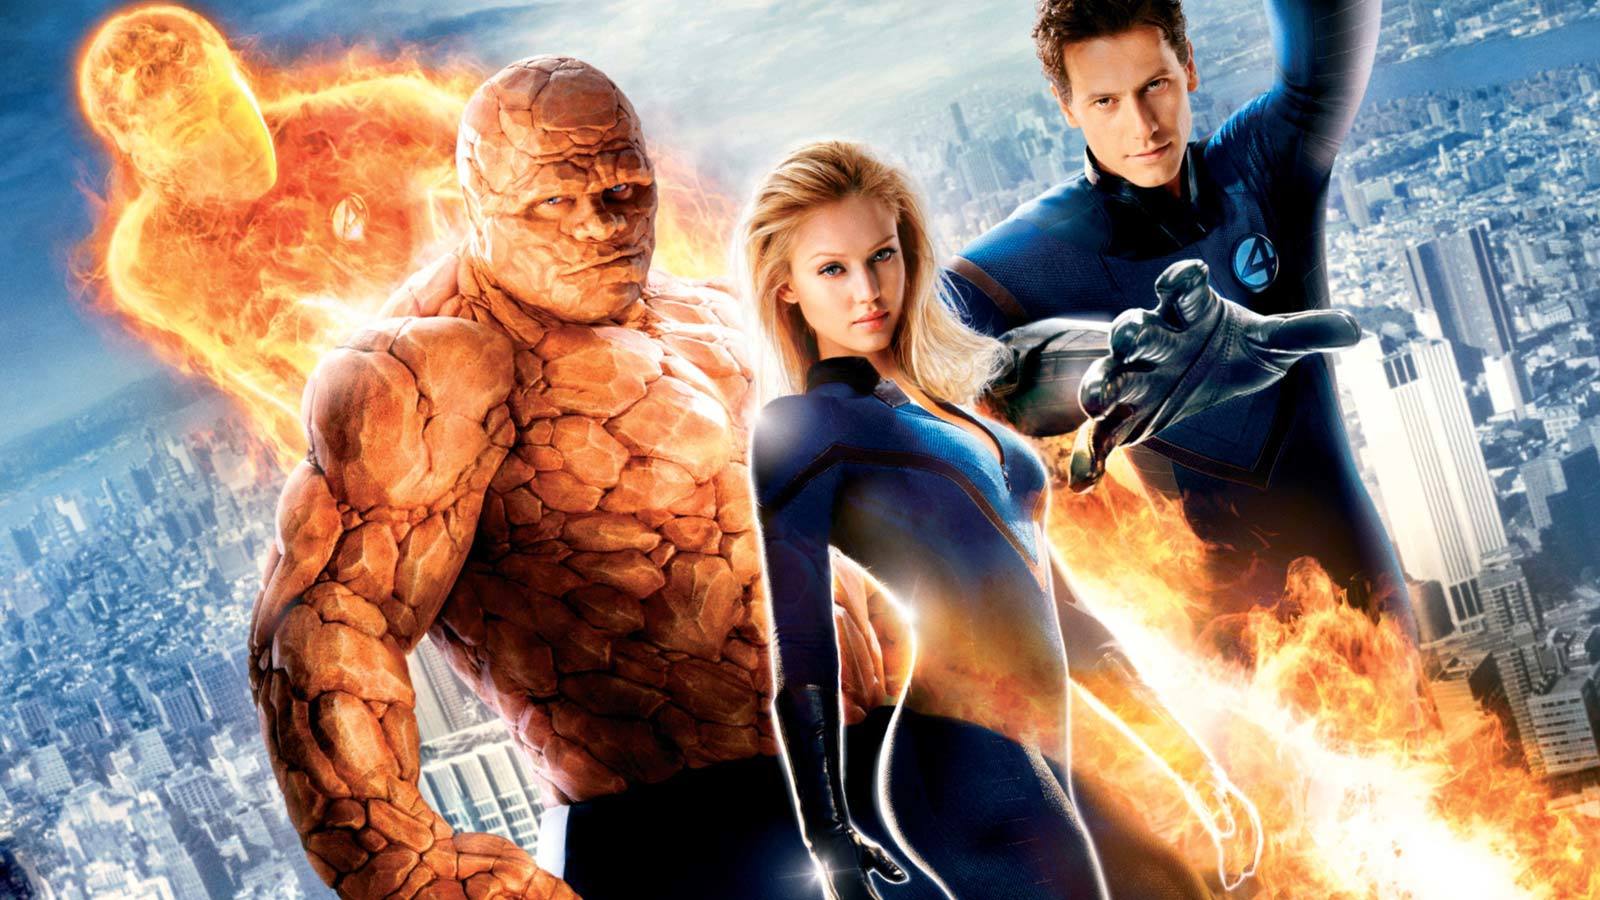 CaV: FOX Fantastic Four (Geekryan) vs. MCU Iron Man (CocaColaMan)